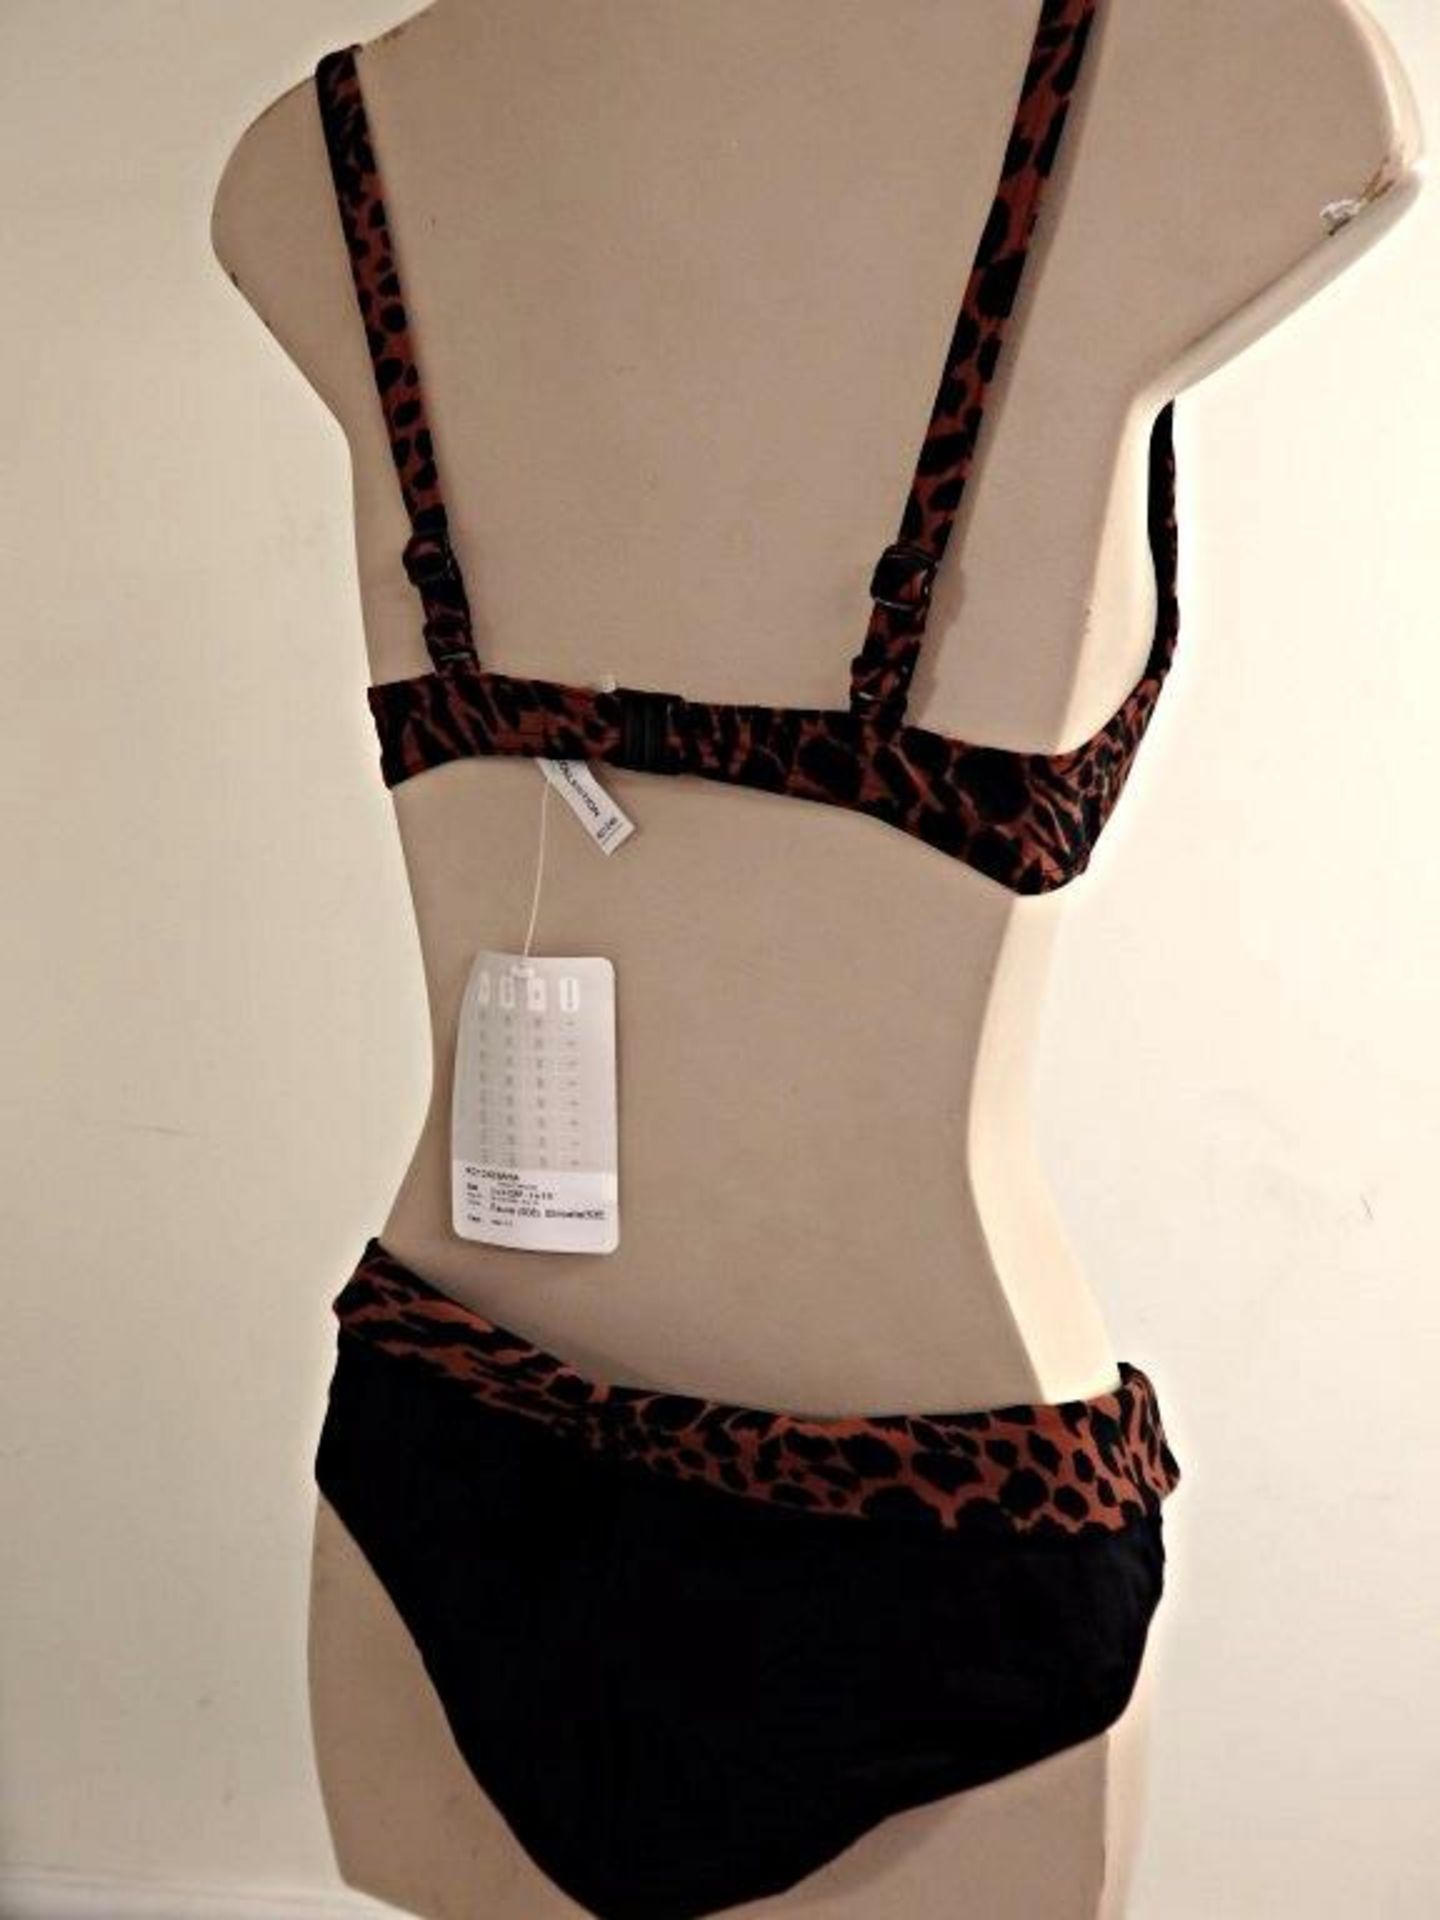 1 x Rasurel - Black/Tan Leopard and Stripe -Bahia Bikini - R21249 - Size 2C - UK 32 - Fr 85 - EU/Int - Image 4 of 9